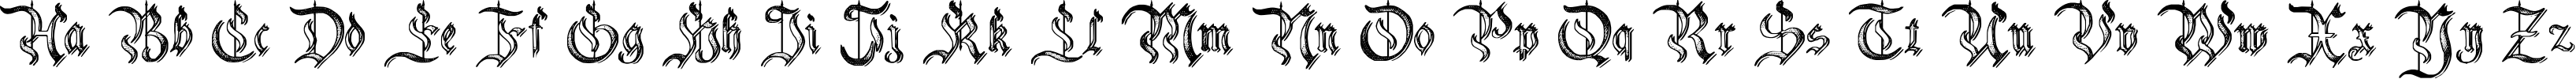 Пример написания английского алфавита шрифтом Charterwell No5